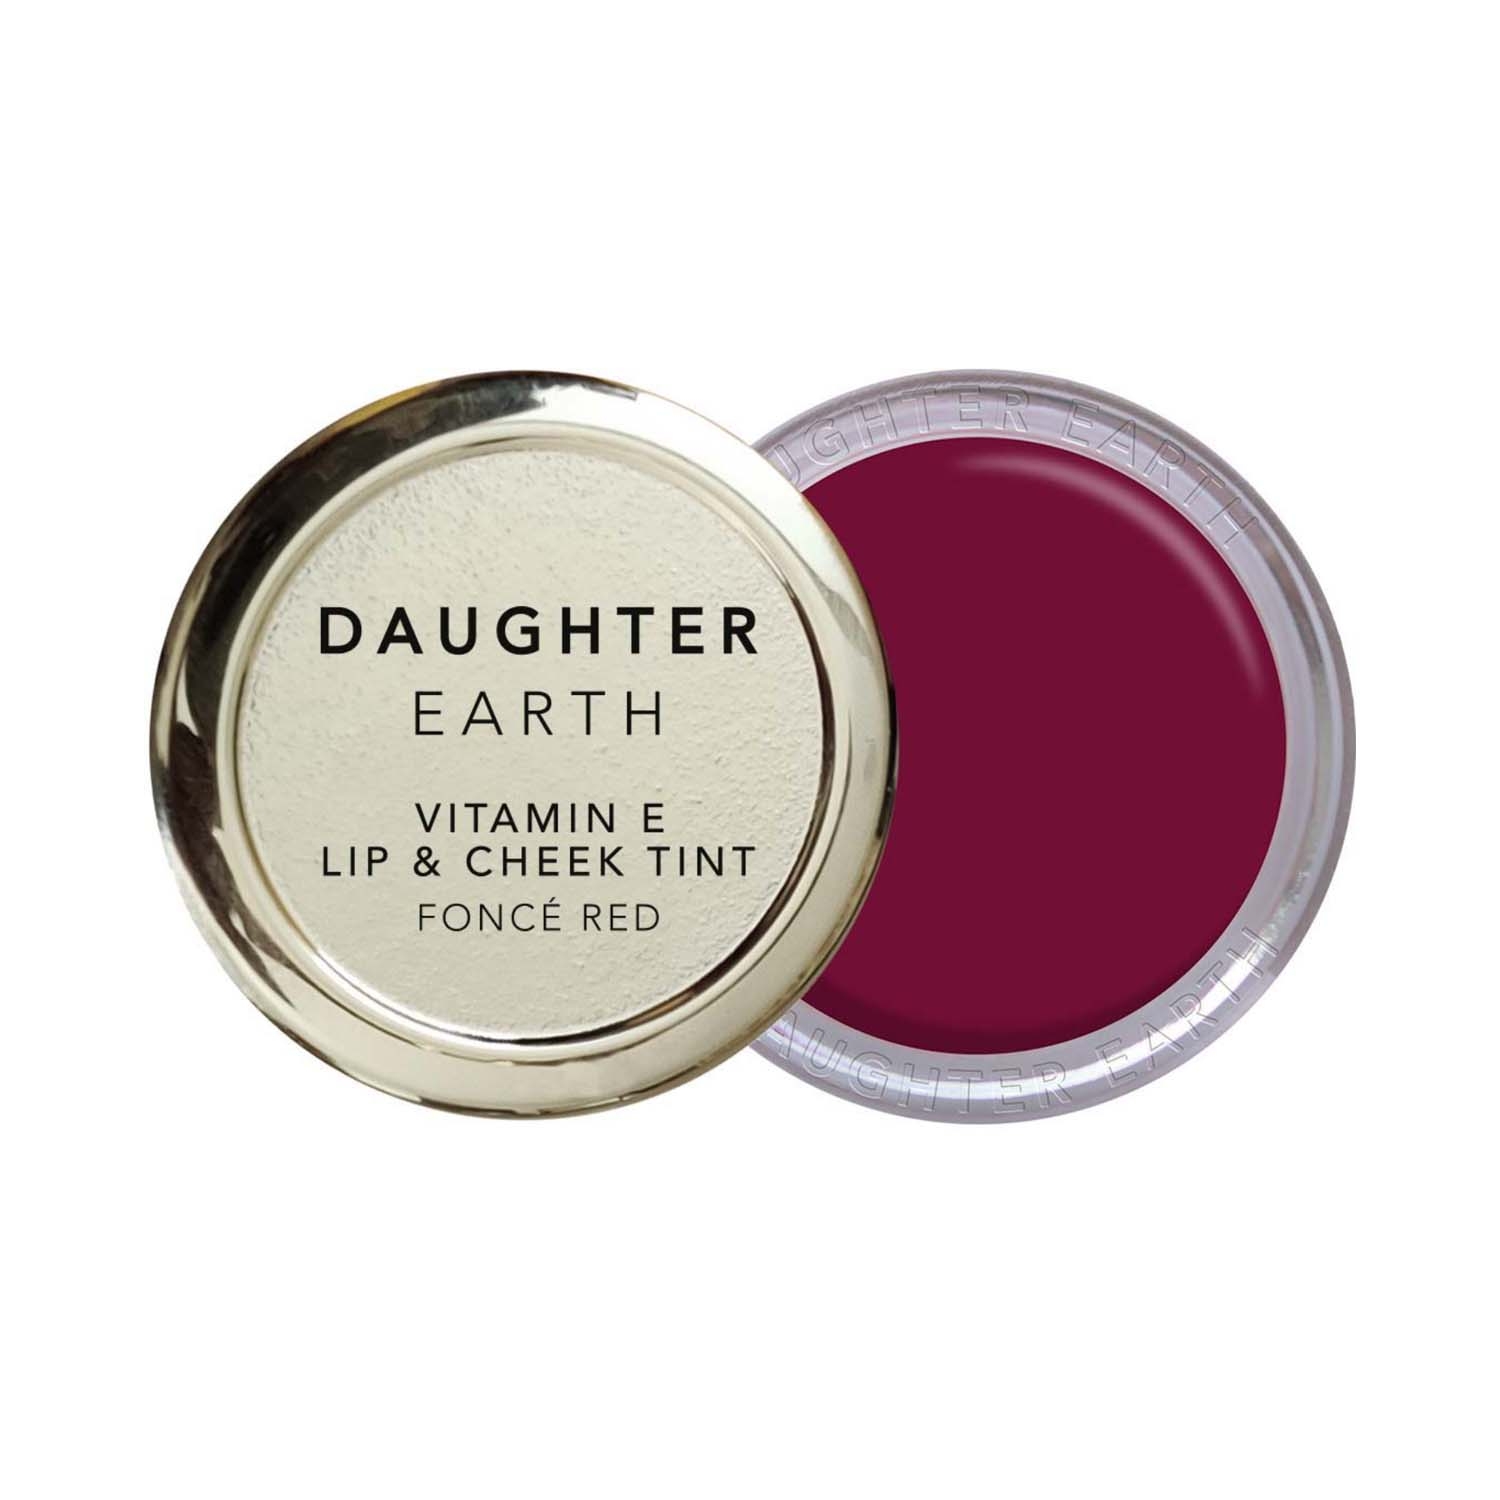  | DAUGHTER EARTH Vitamin E Lip & Cheek Tint - Fonce Red (4.5g)